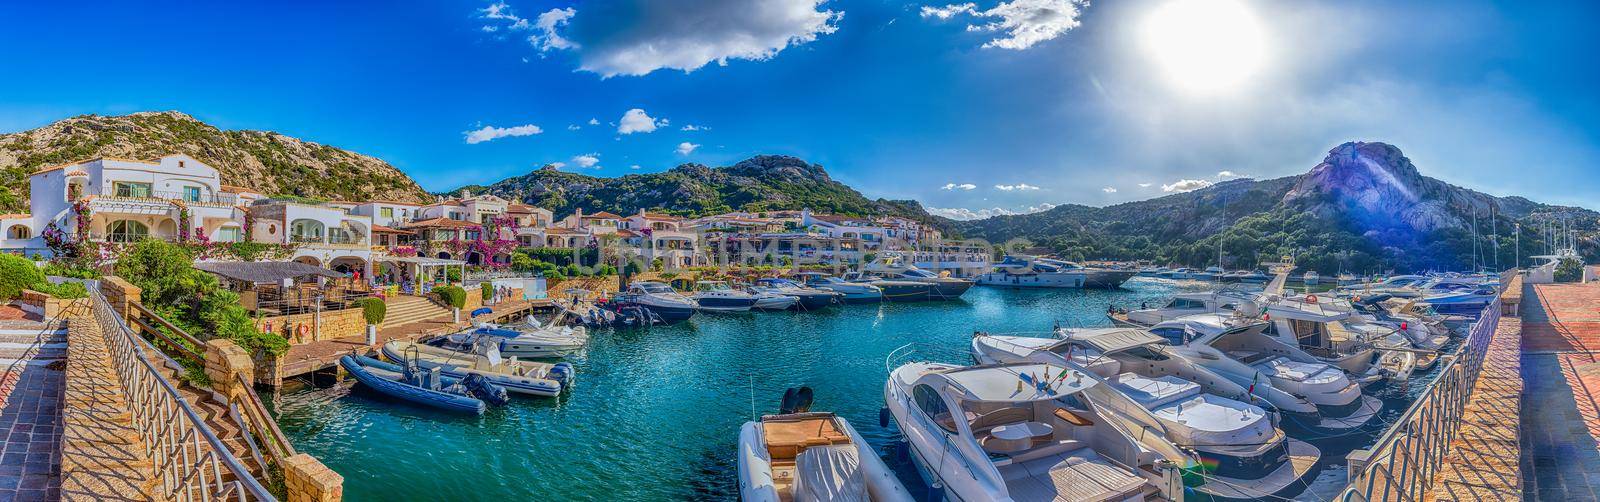 The scenic harbor of Poltu Quatu, Costa Smeralda, Sardinia, Italy by marcorubino